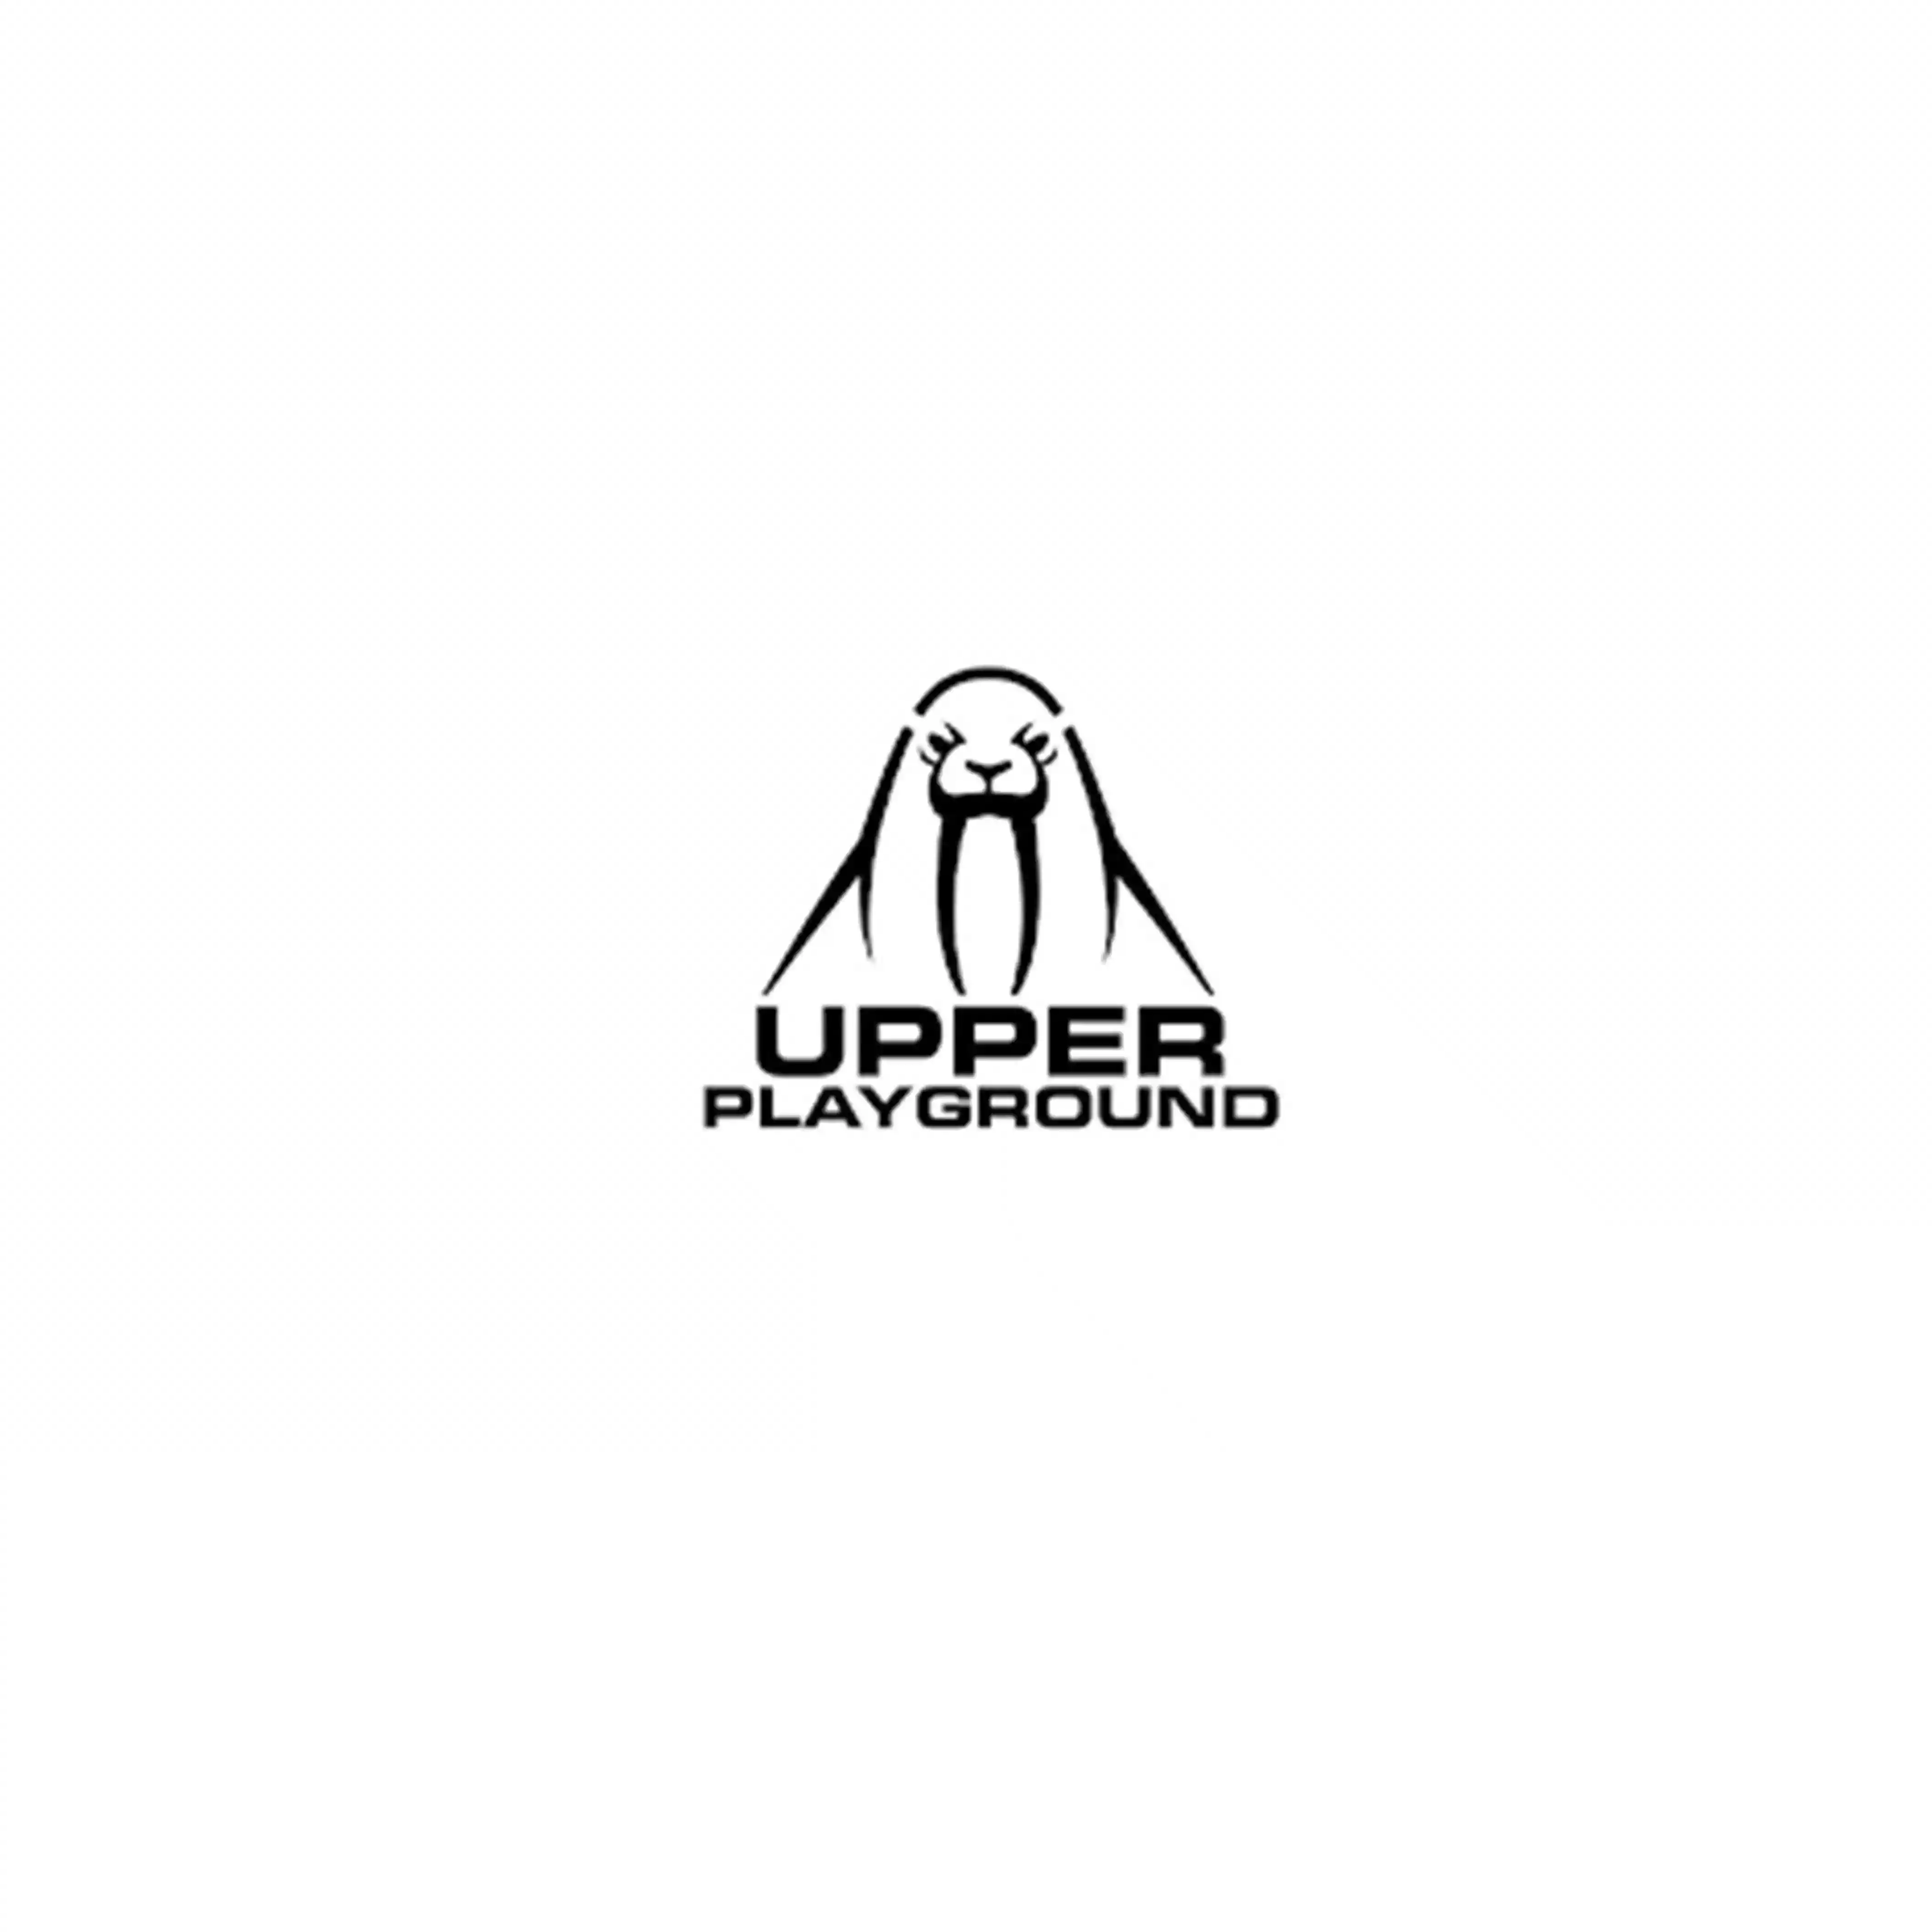 Upperplayground logo